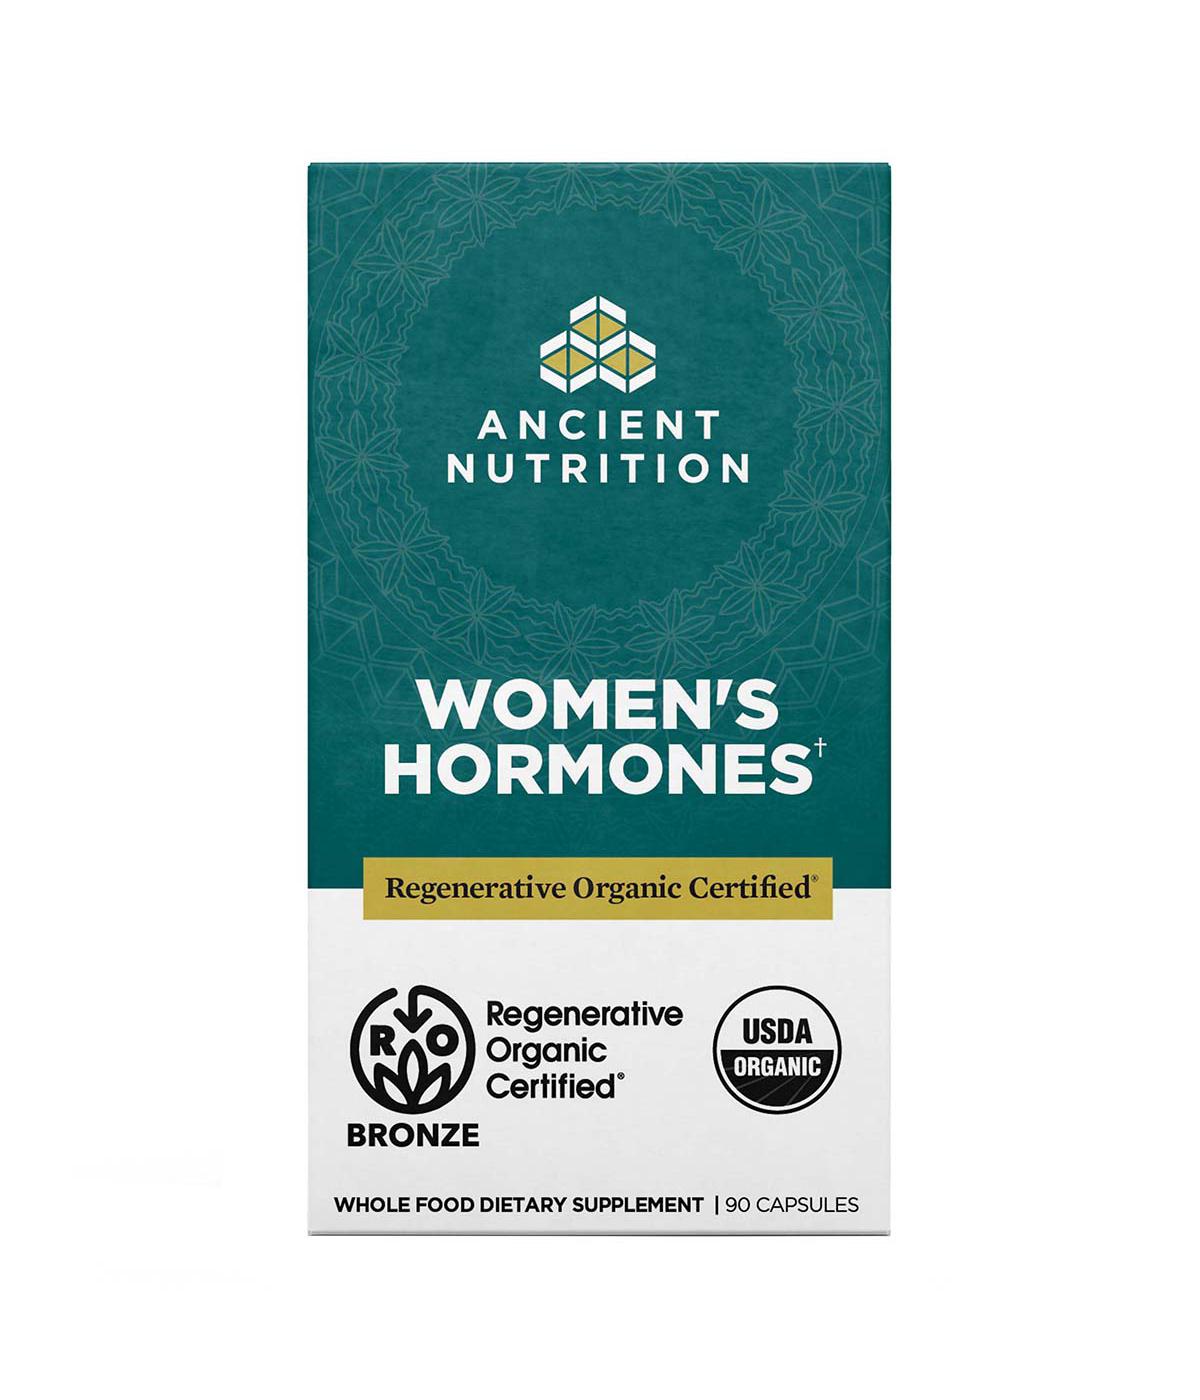 Ancient Nutrition Women's Hormones Capsules; image 1 of 3